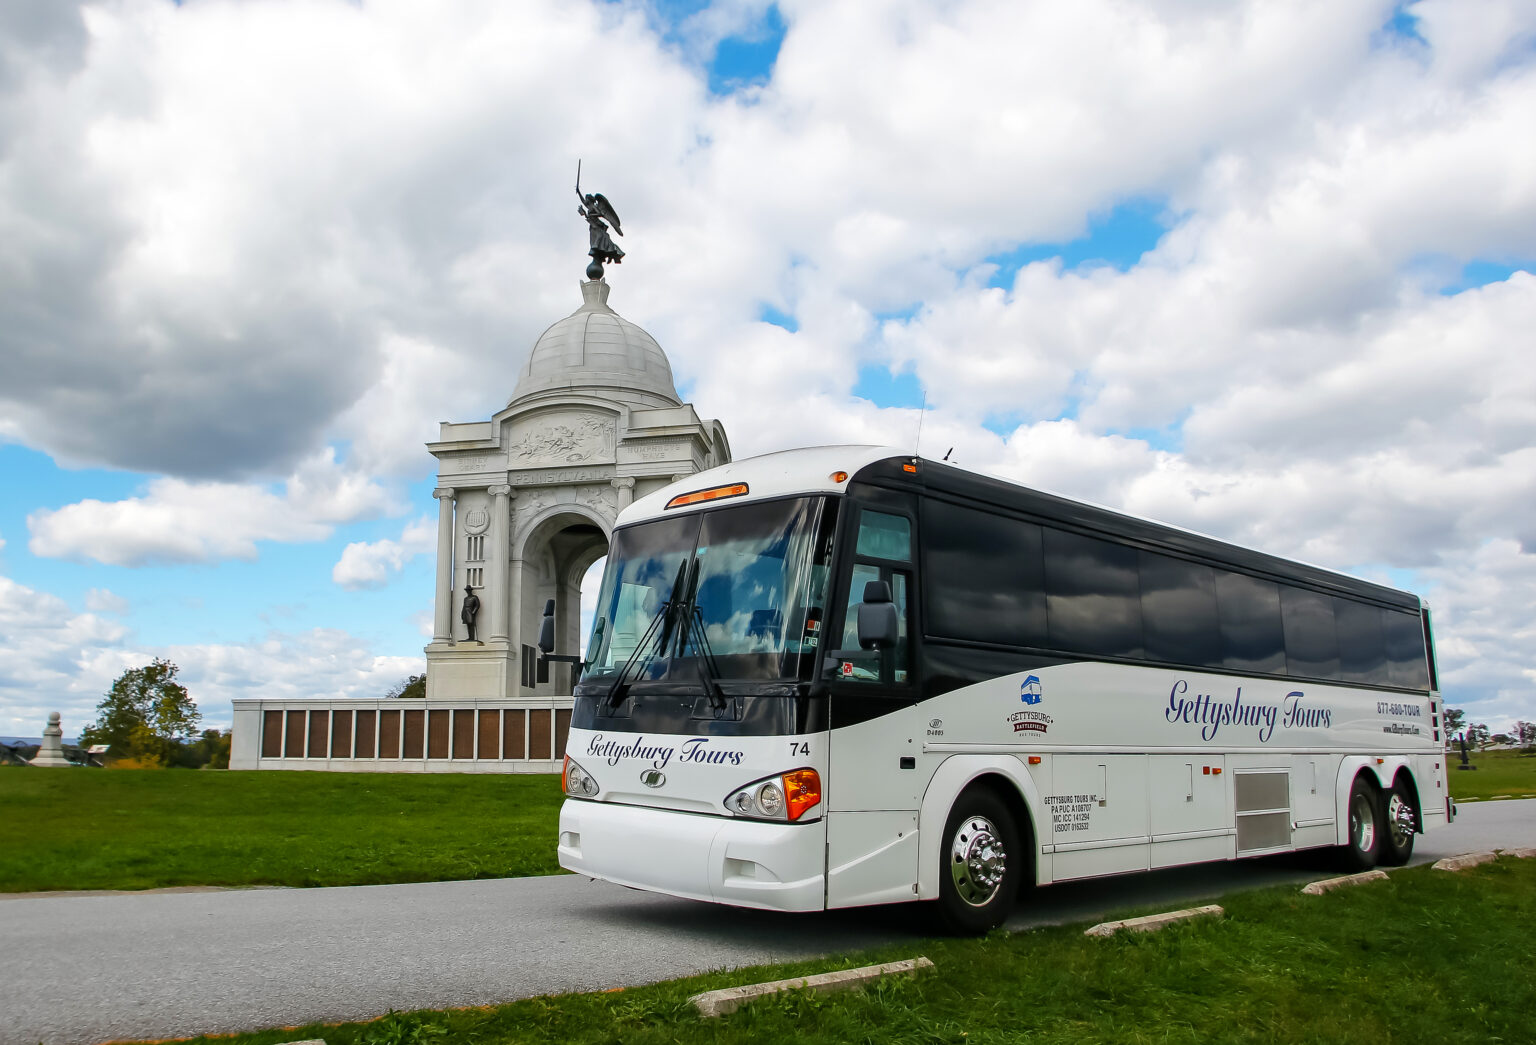 bus tours of gettysburg battlefield